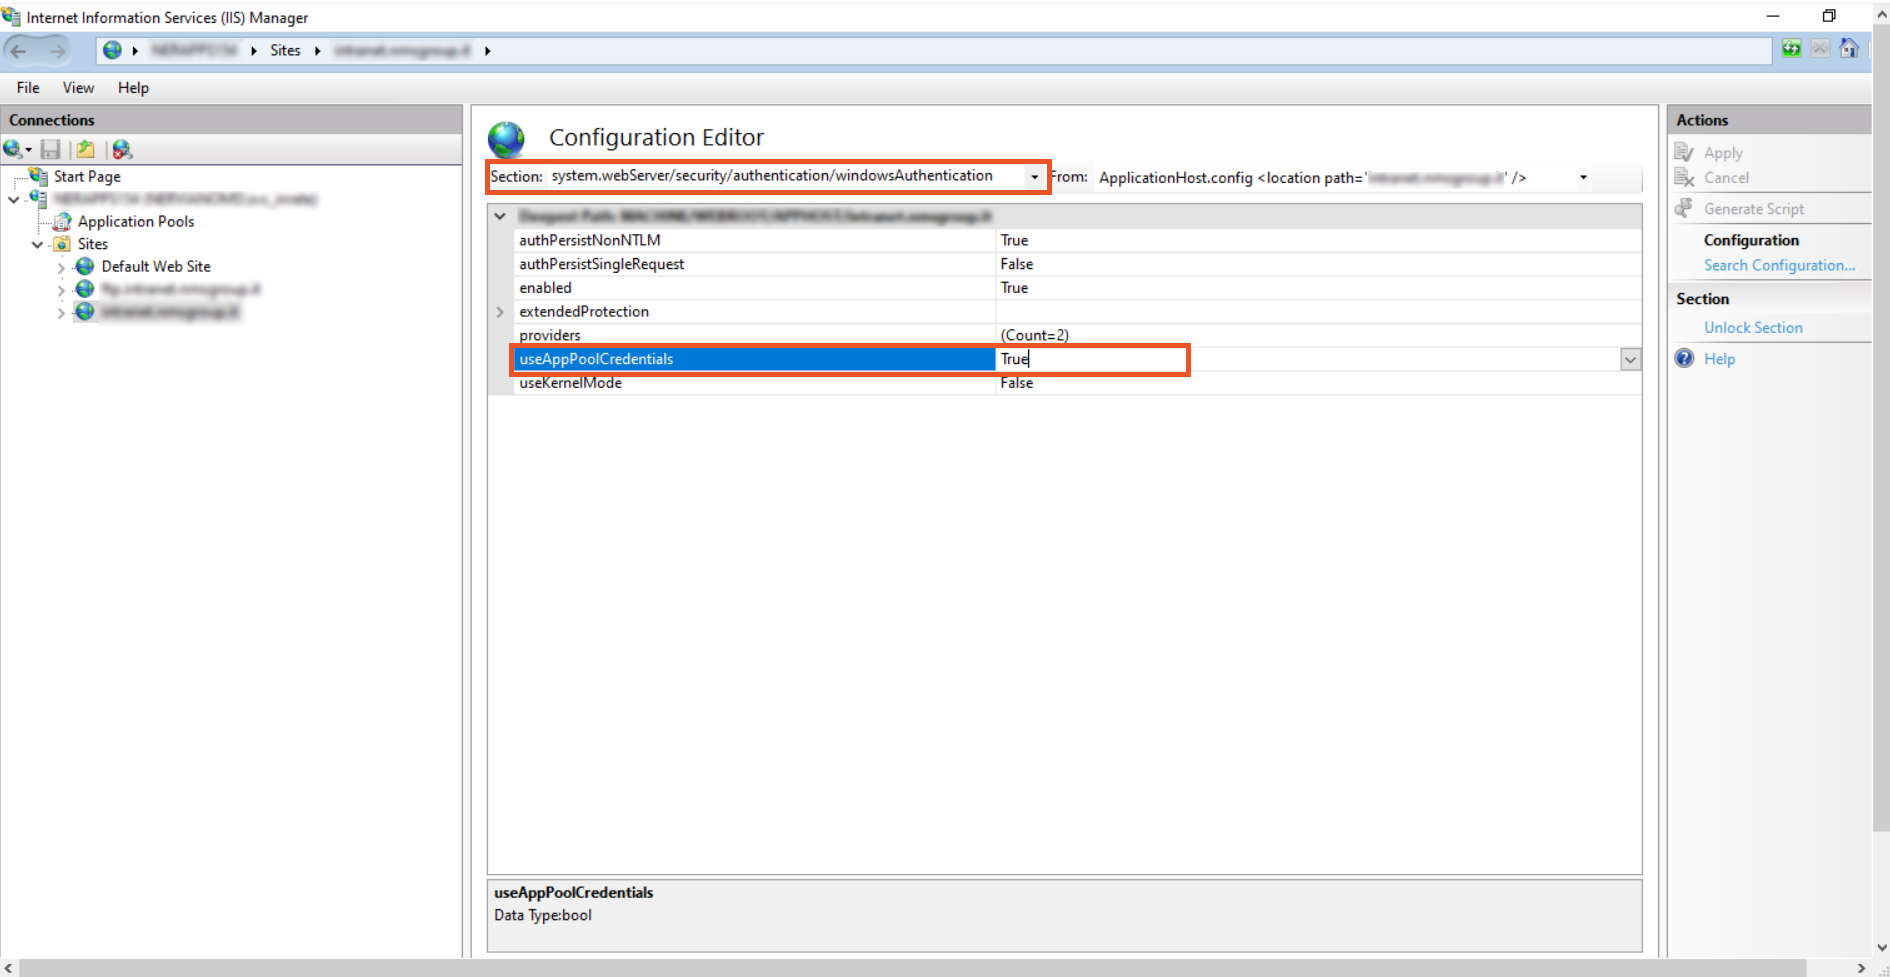 Configure useAppPoolCredentials to configure Kerberos authentication for Windows IIS server